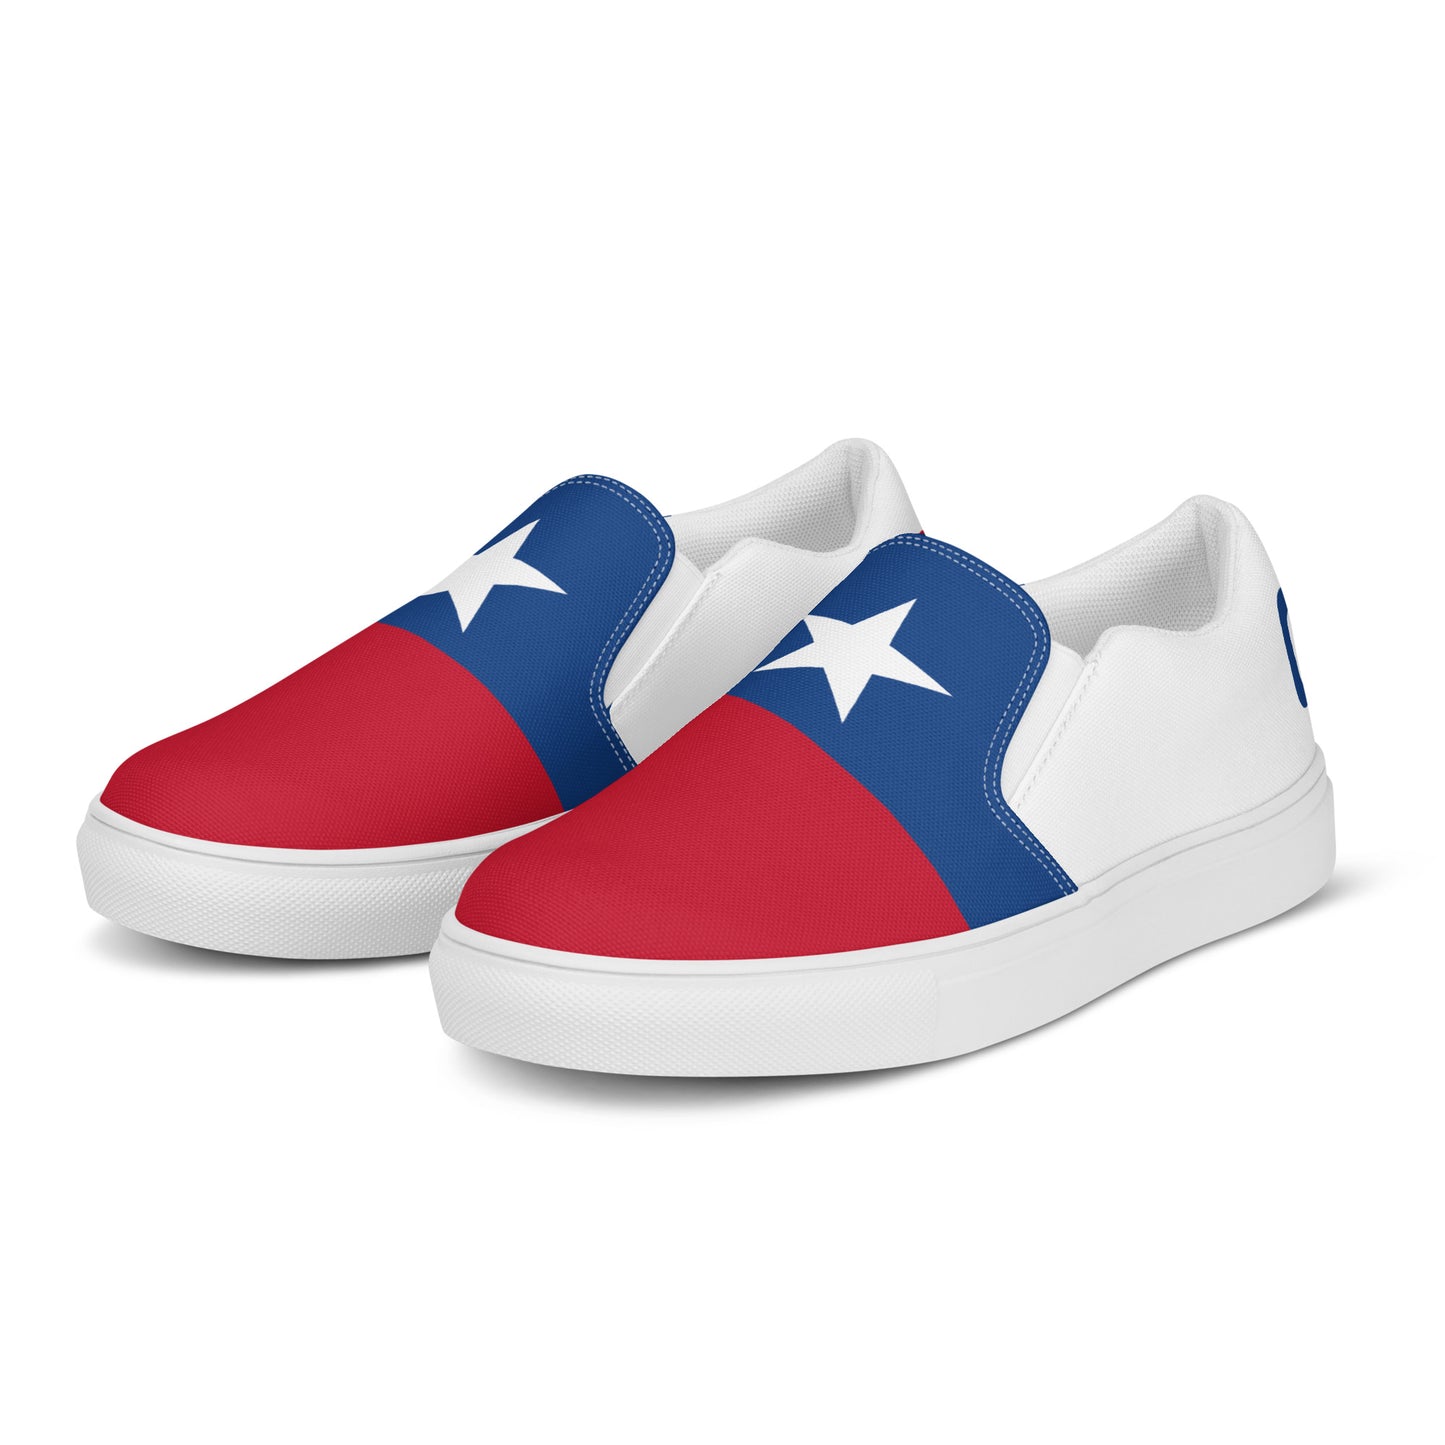 Chile - Hombre - Bandera - Zapatos Slip-on